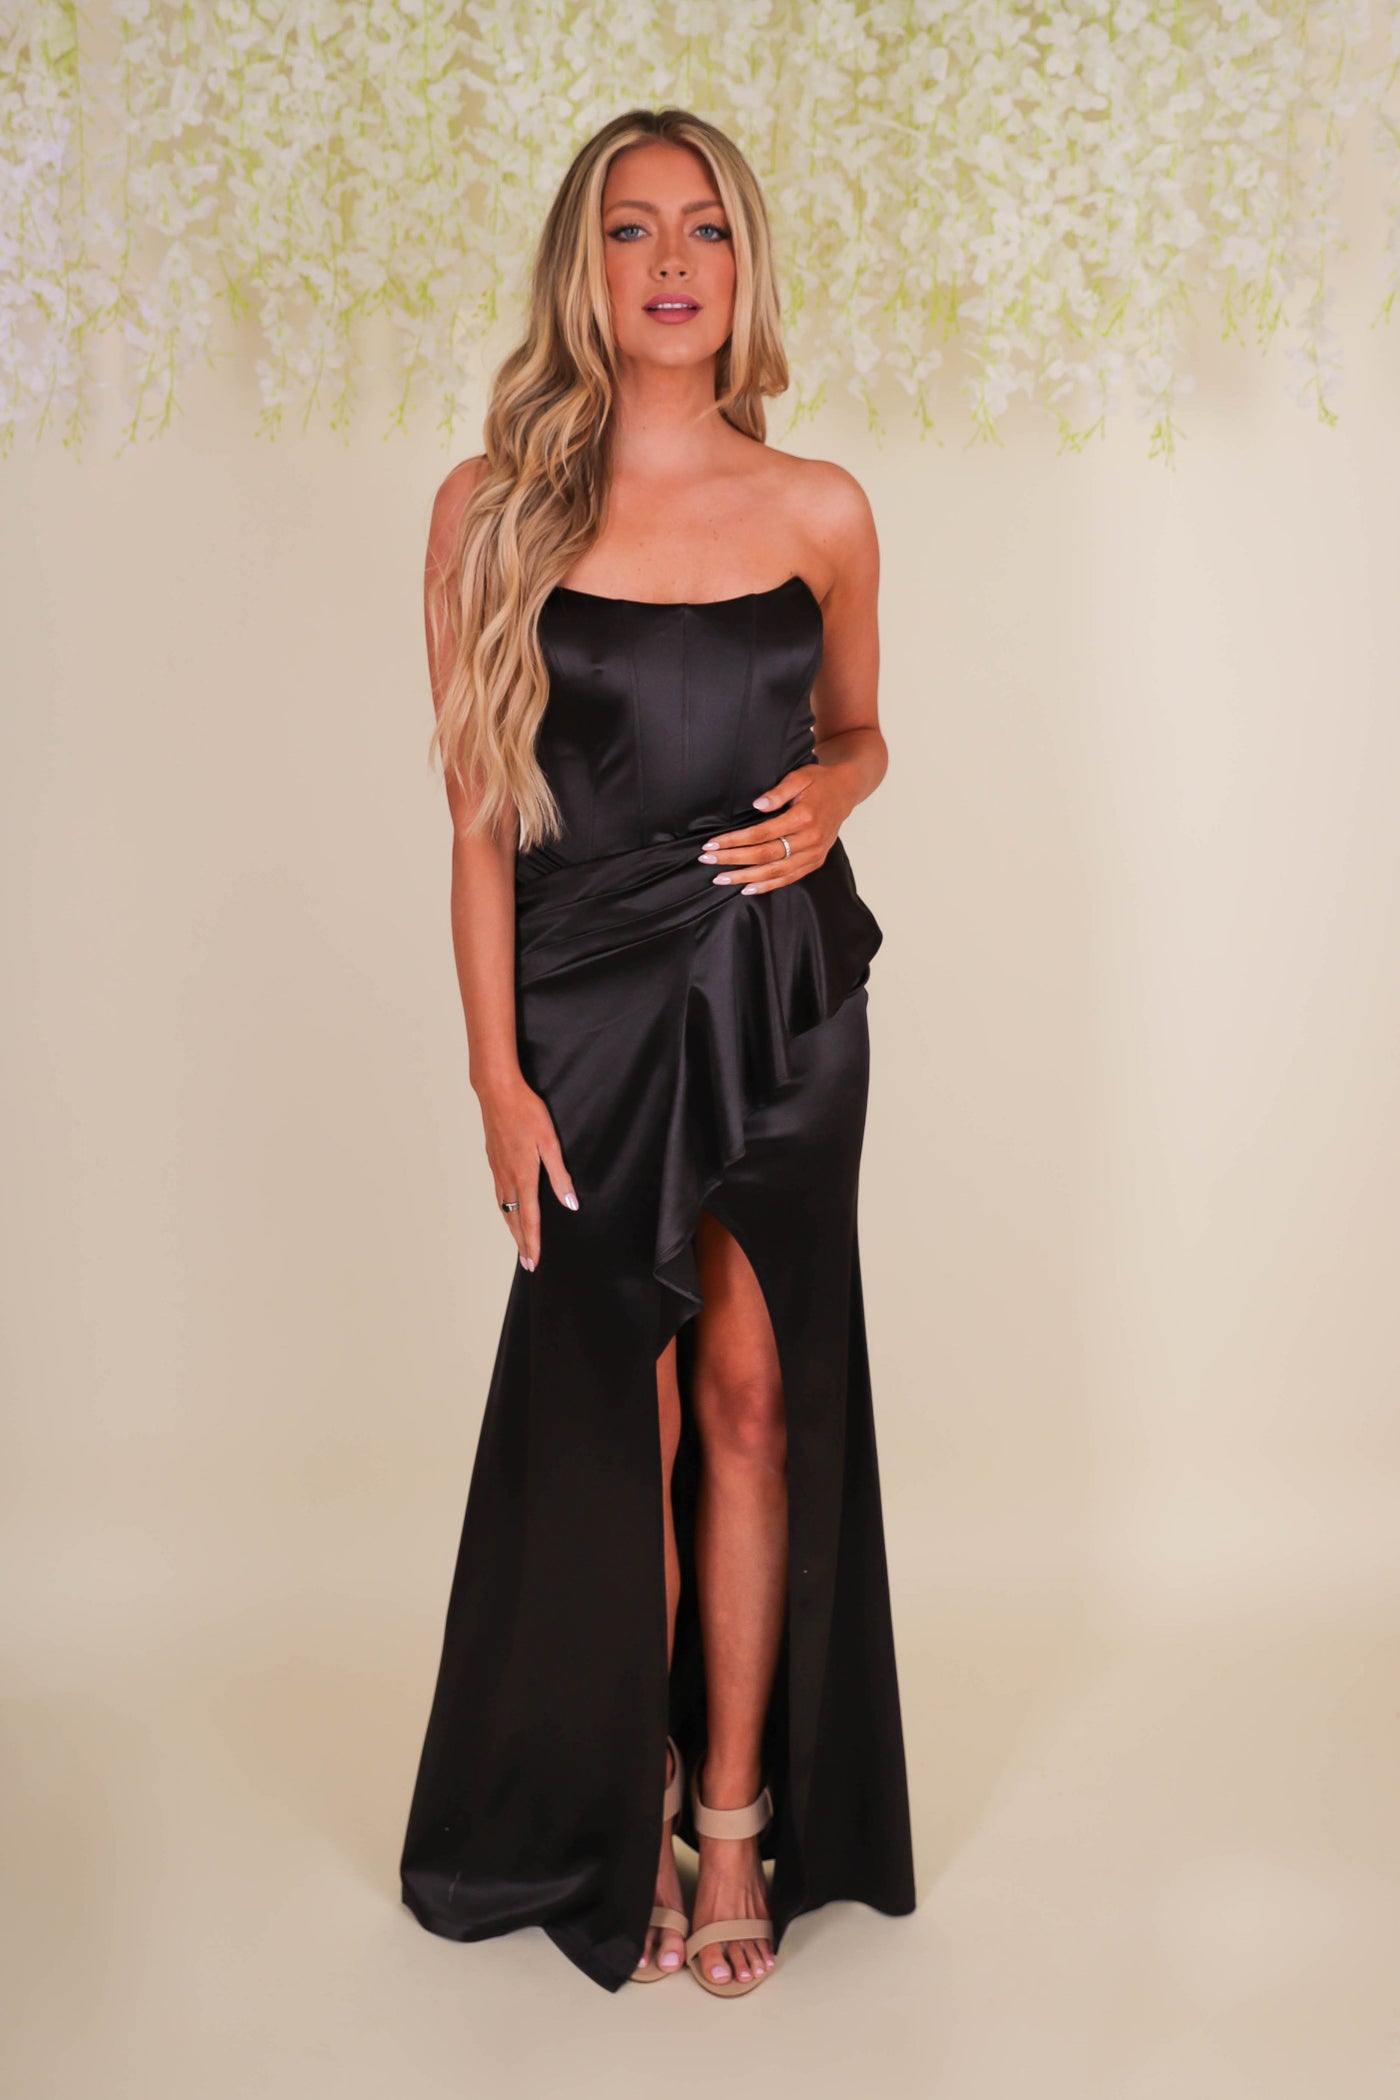 Black Satin Formal Maxi Dress- Satin Bustier Top Dress- Formal Wedding Guest Dresses